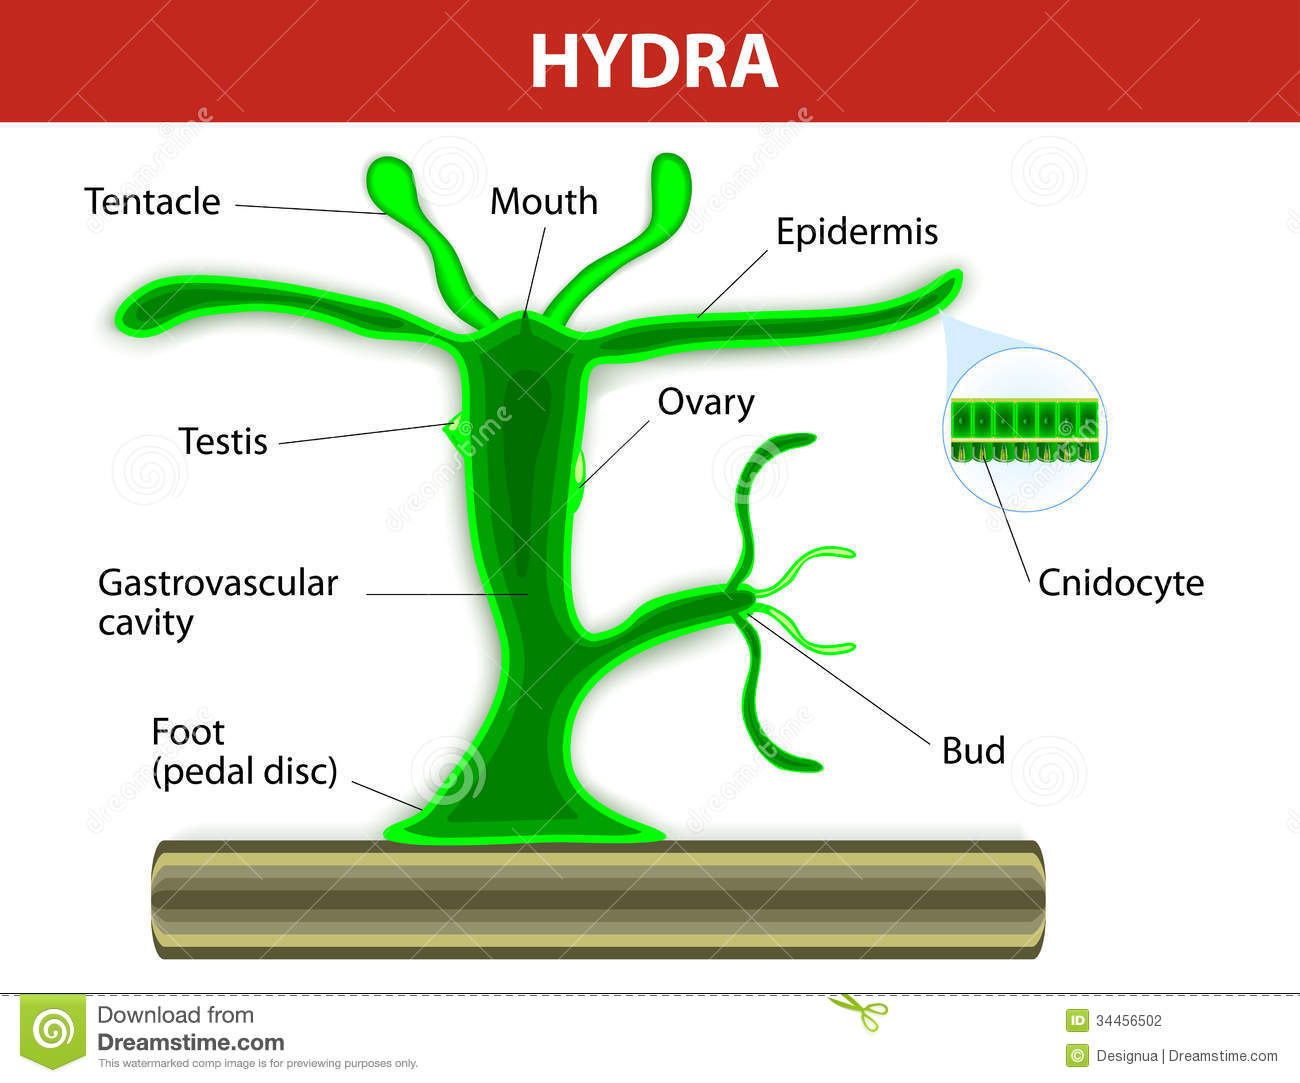 Hydra onion biz